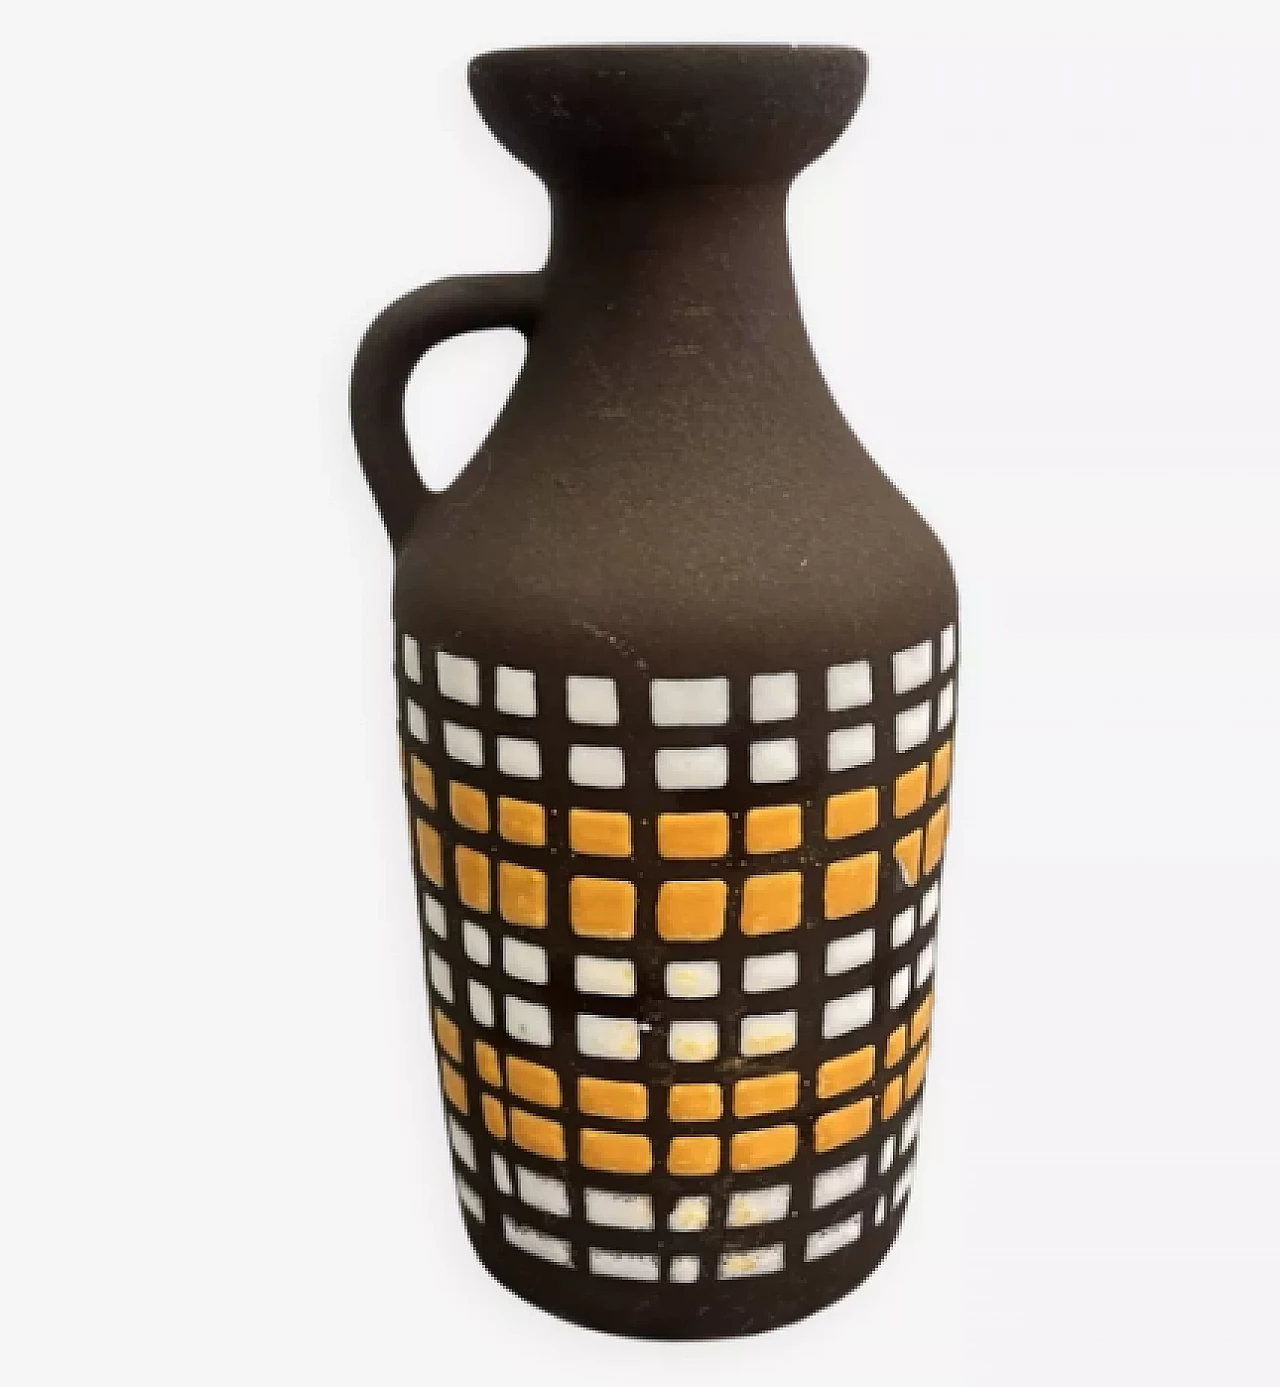 Vaso 1302 in ceramica di Strehla Keramik, anni '70 1